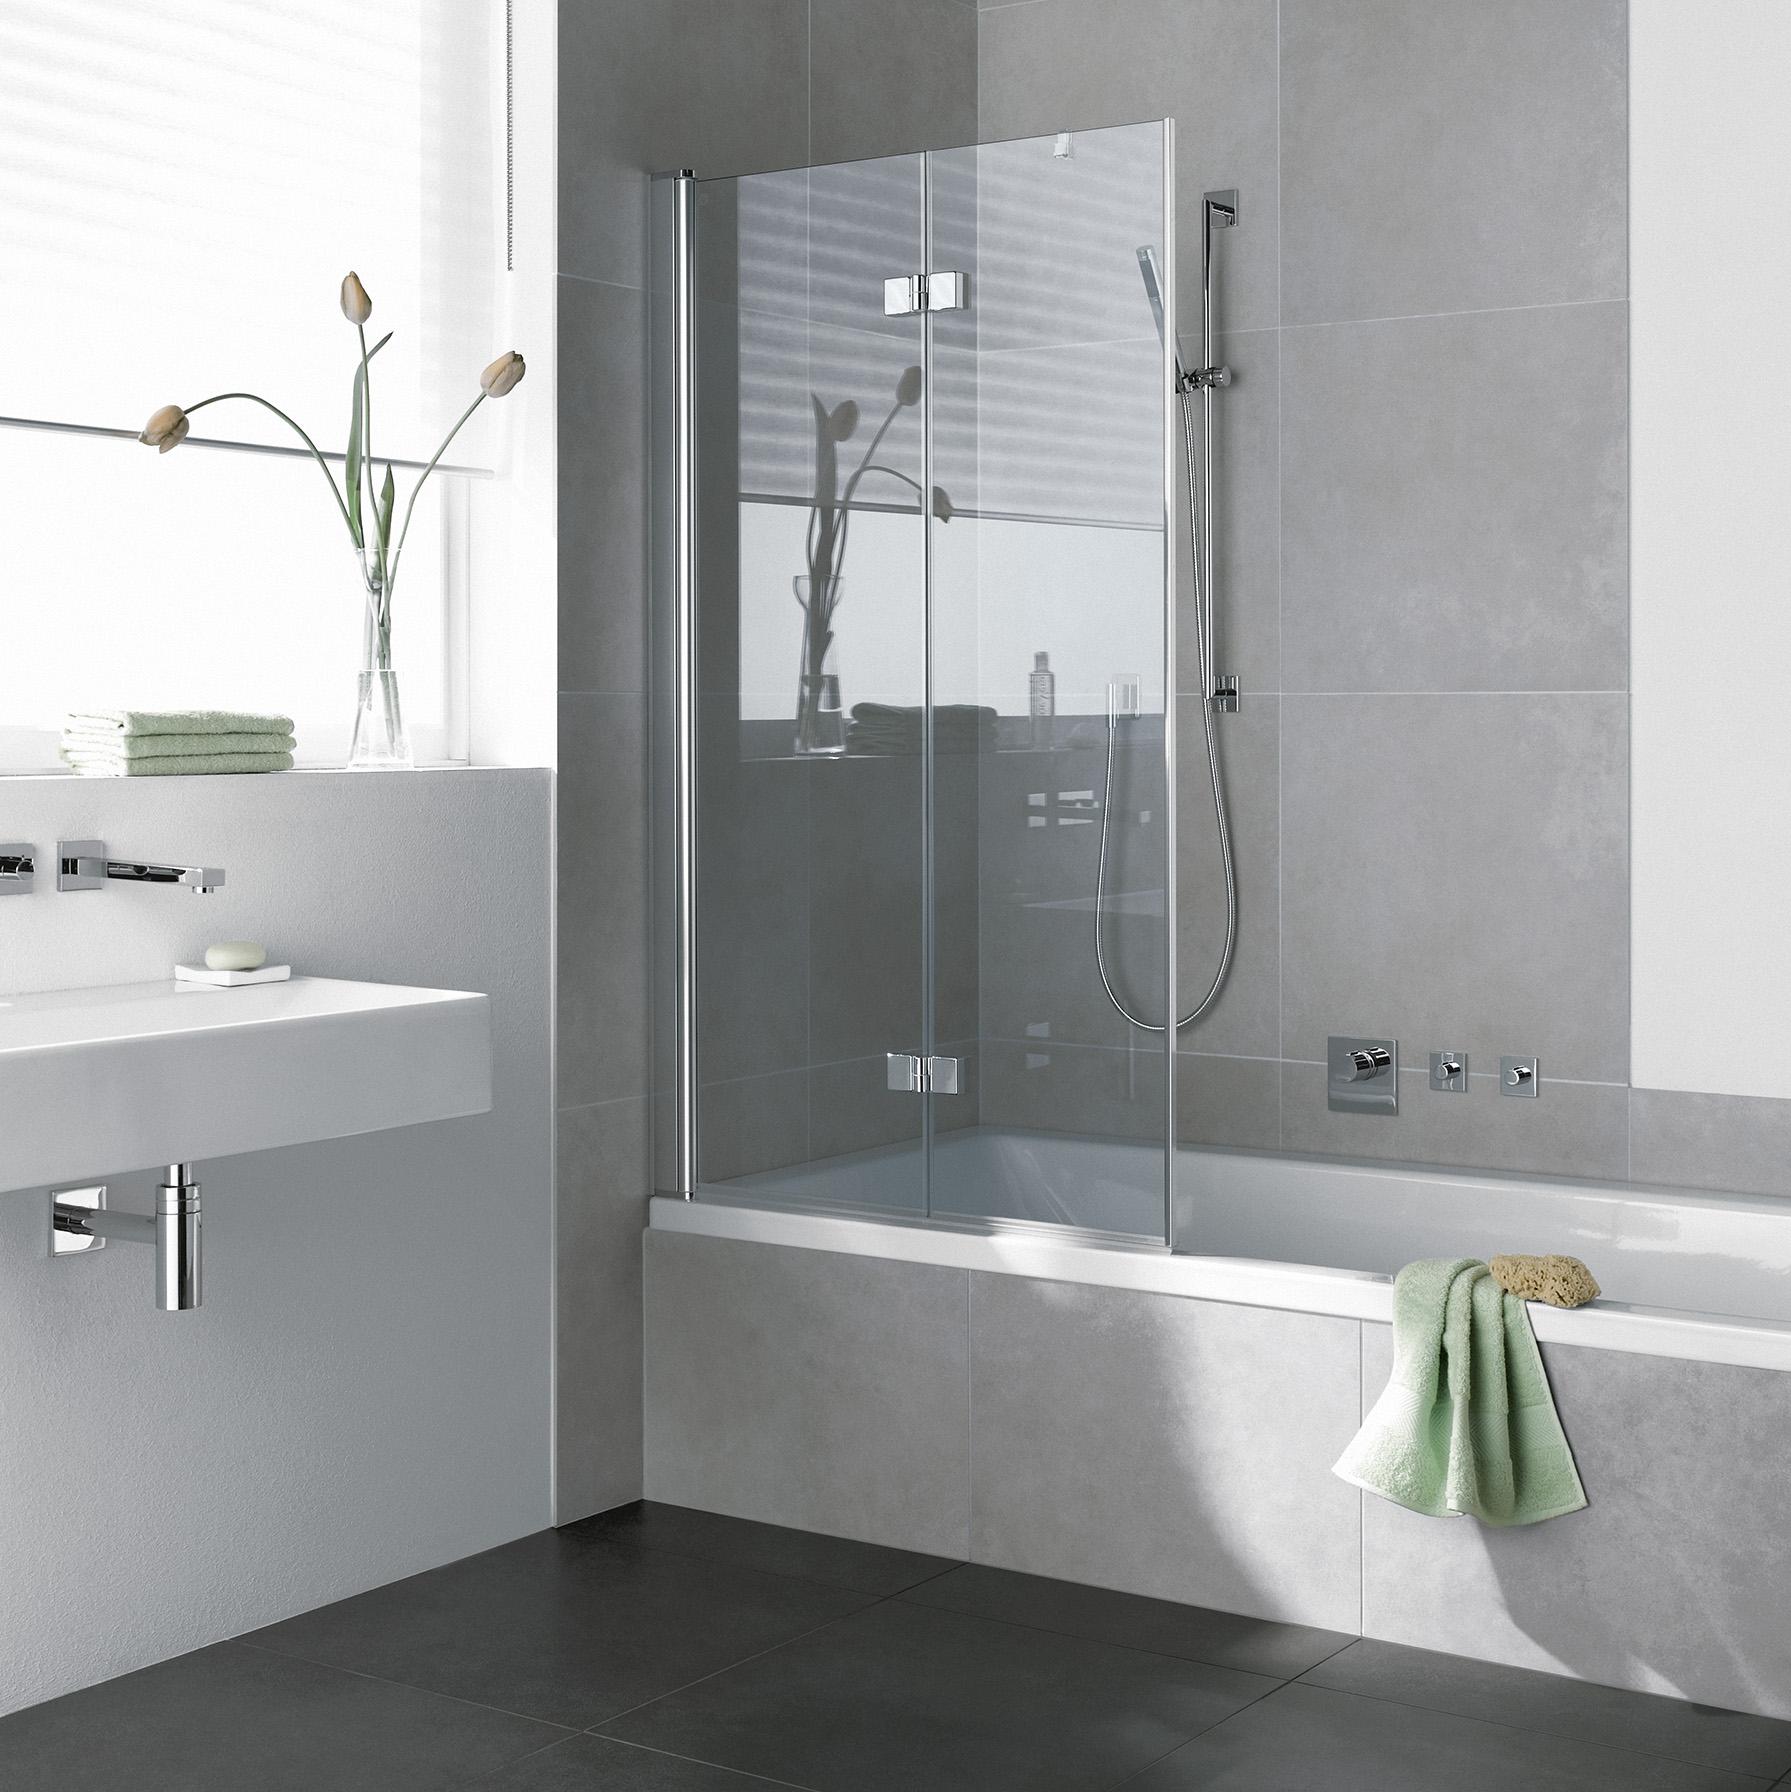 Kermi profile shower enclosure, DIGA two-panel folding screen for bathtub